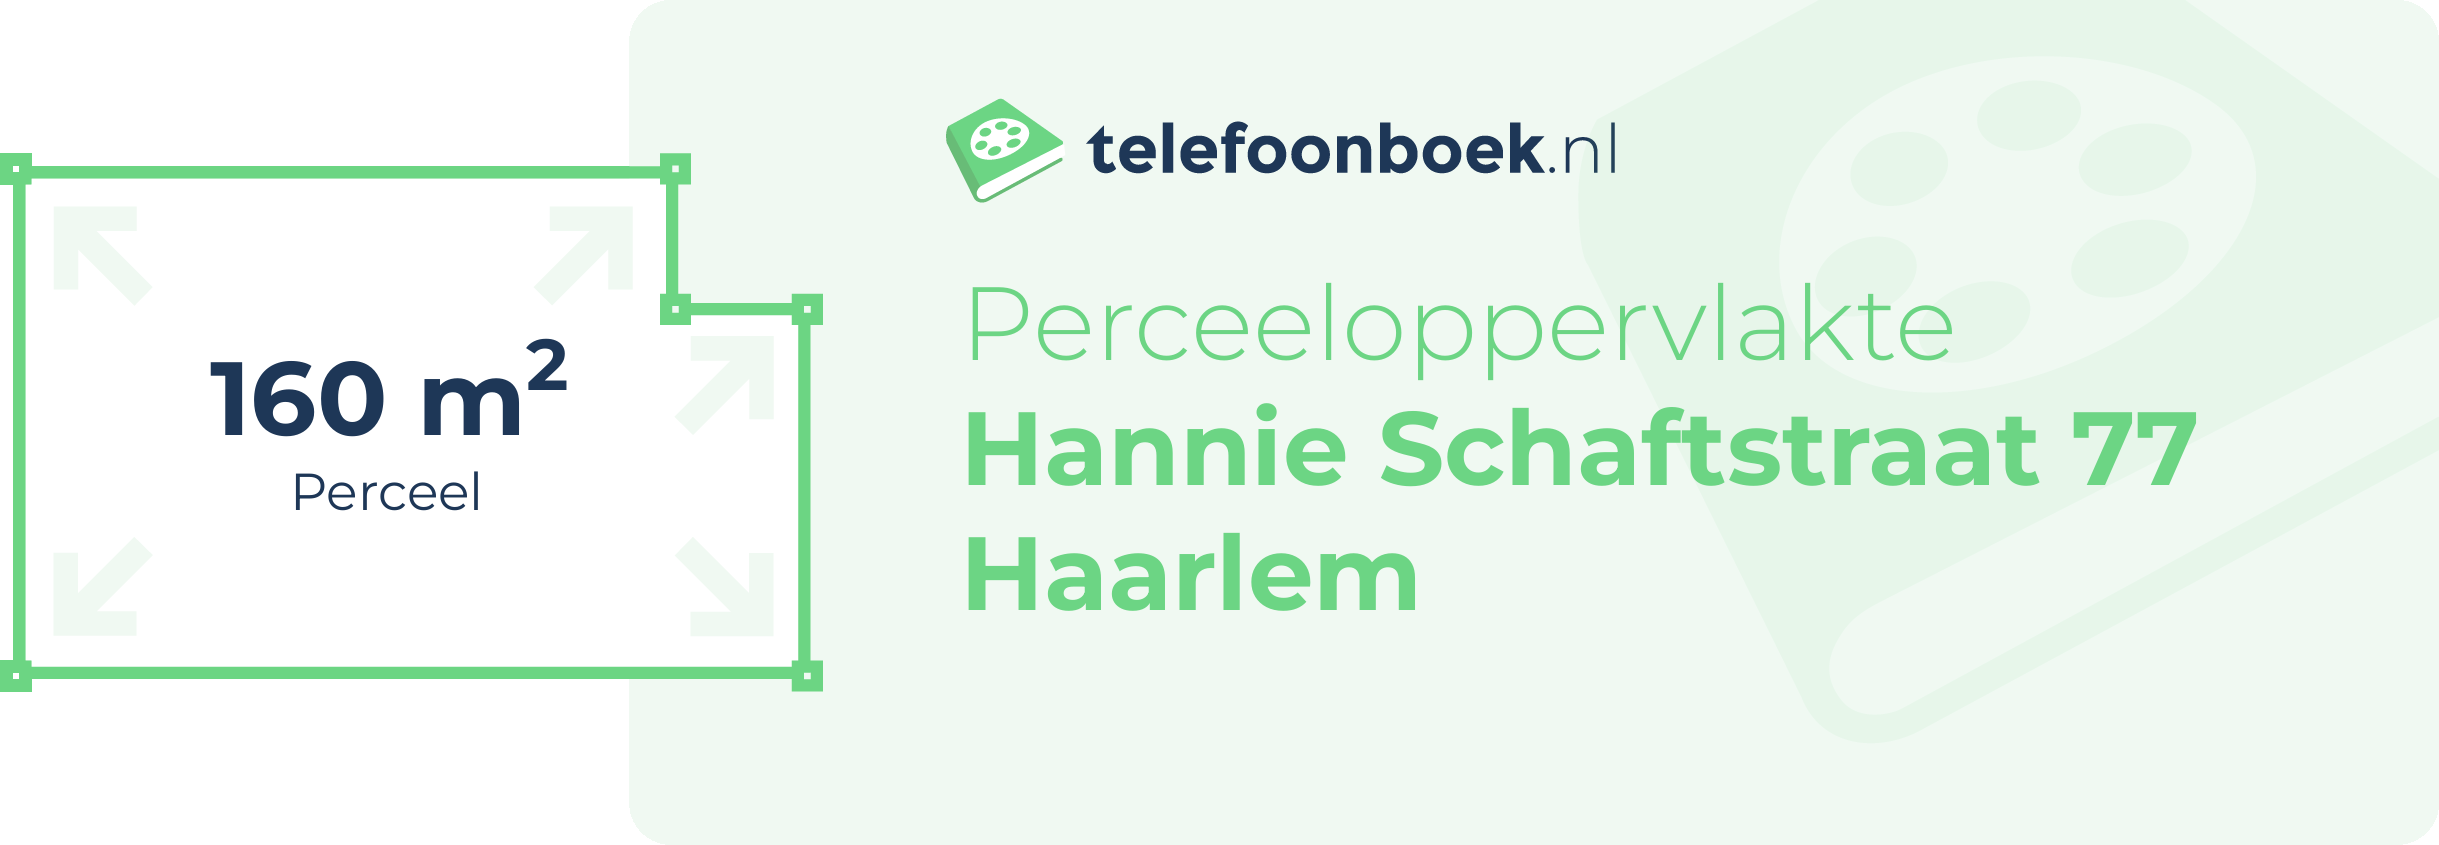 Perceeloppervlakte Hannie Schaftstraat 77 Haarlem